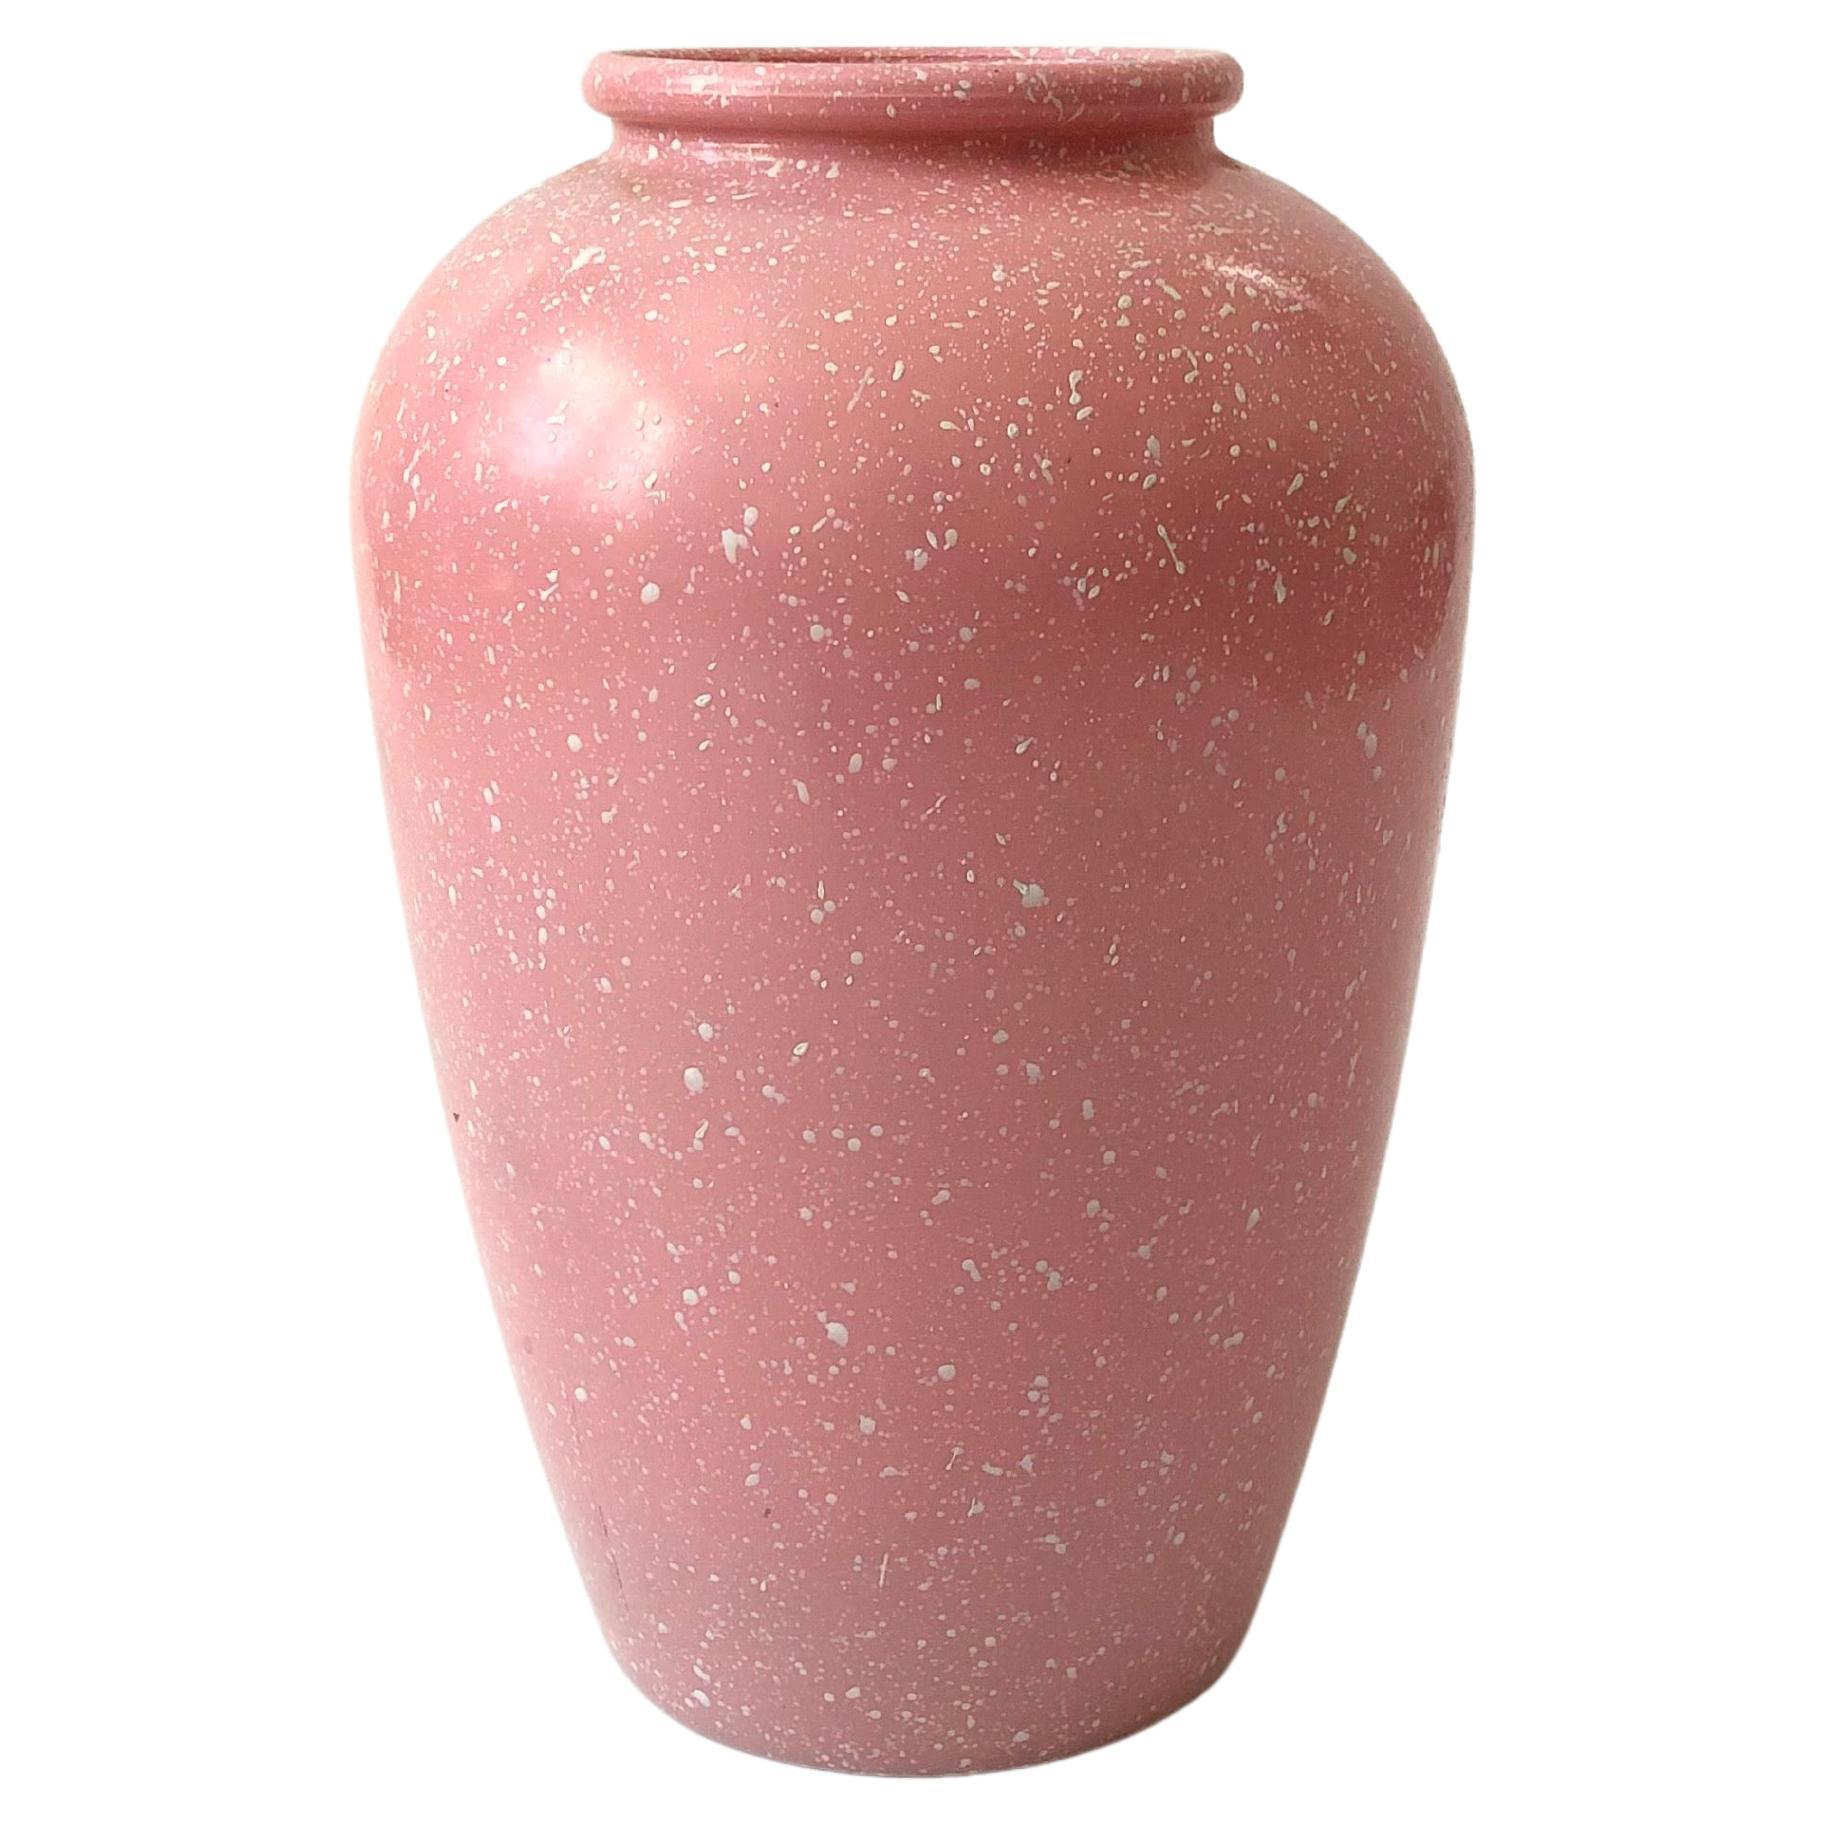 Large 1980s Pink Glass Vase by Studio Nova Portugal